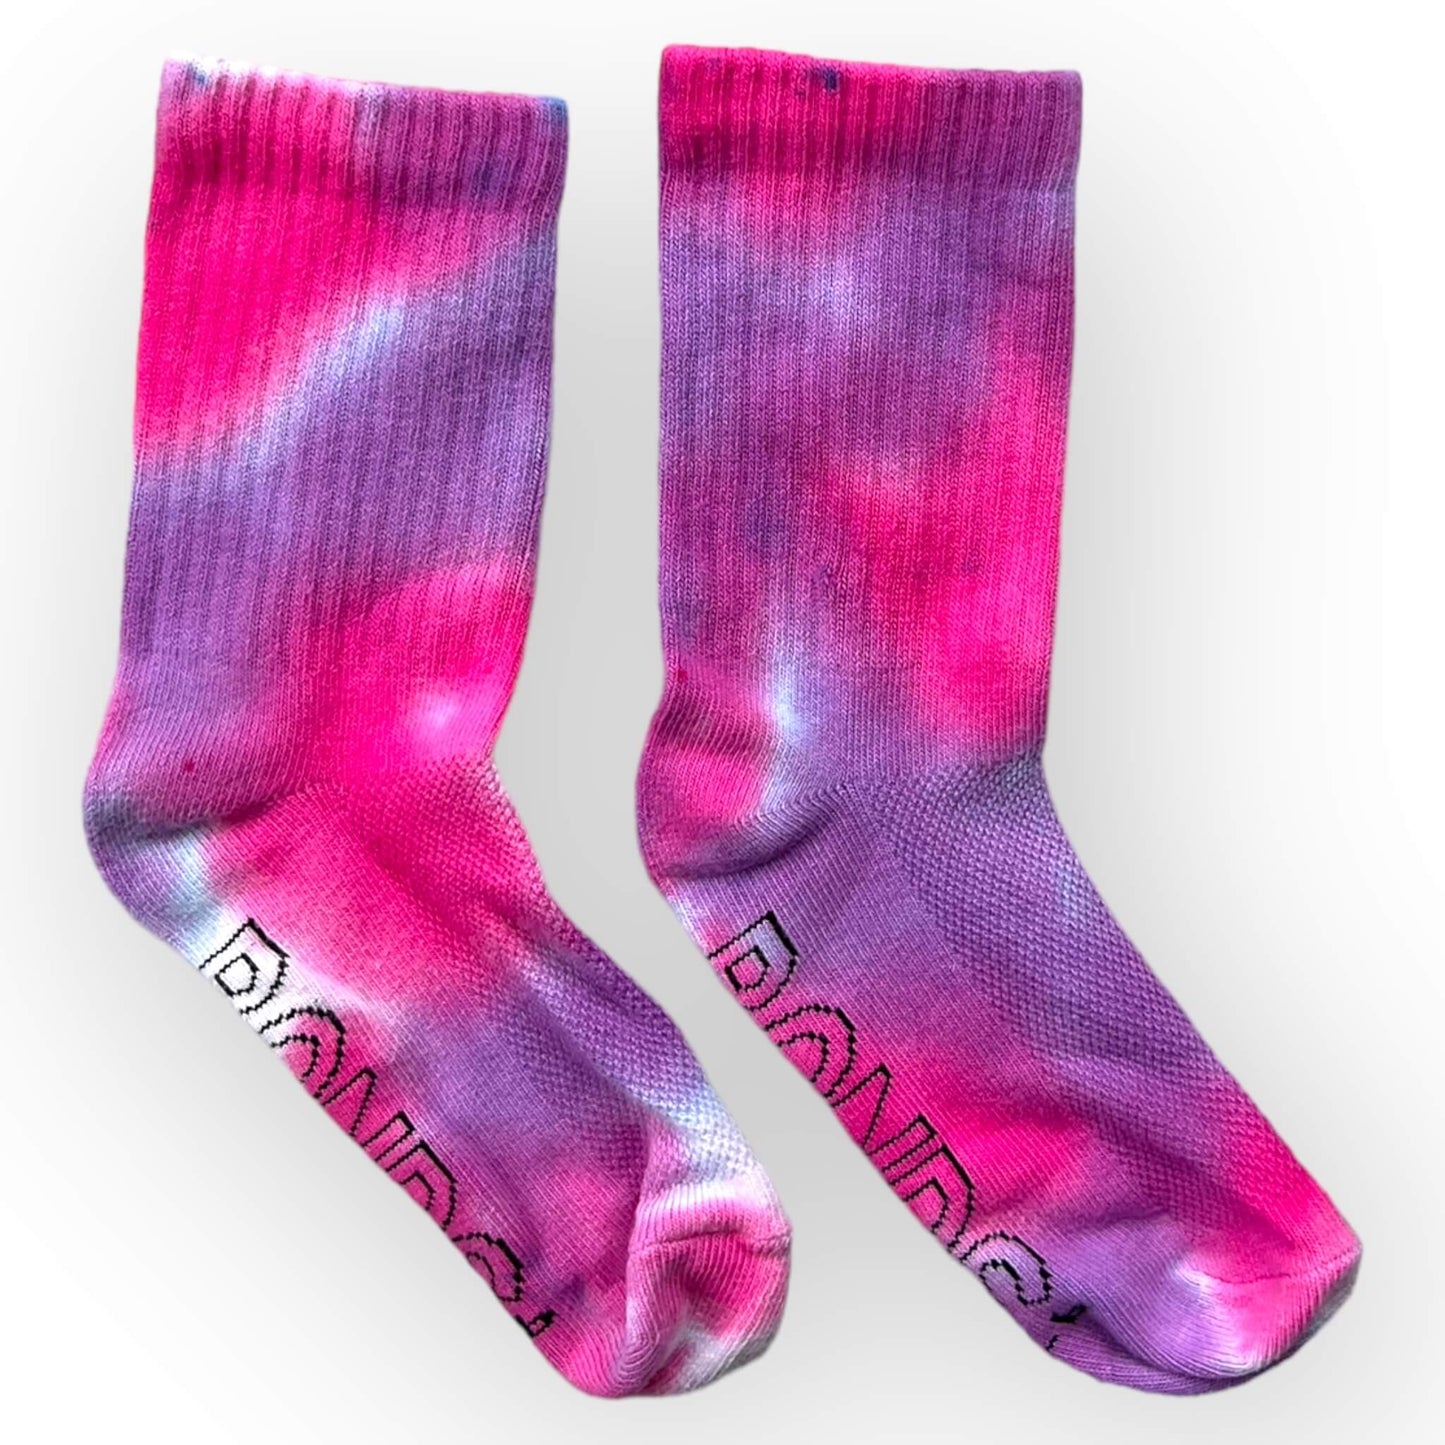 Tie Dye Socks - Size 9-12 (5-8 yrs)